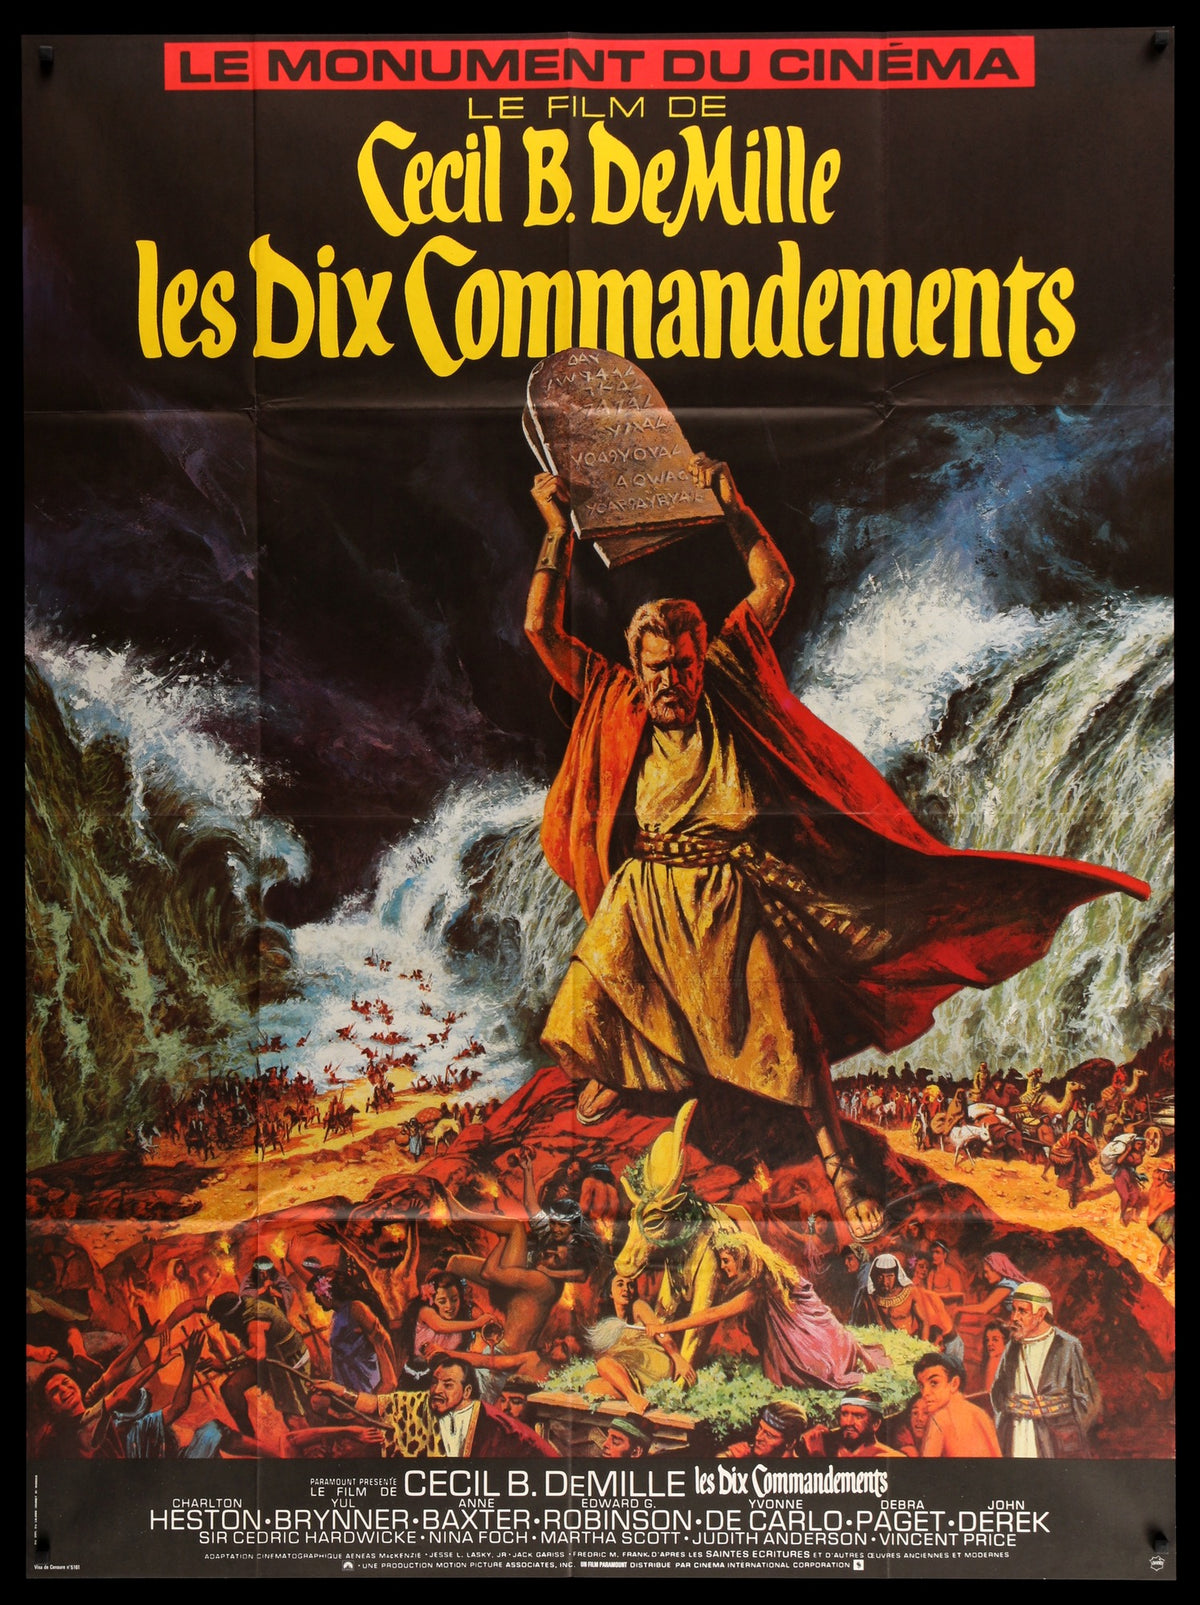 Ten Commandments (1956) original movie poster for sale at Original Film Art